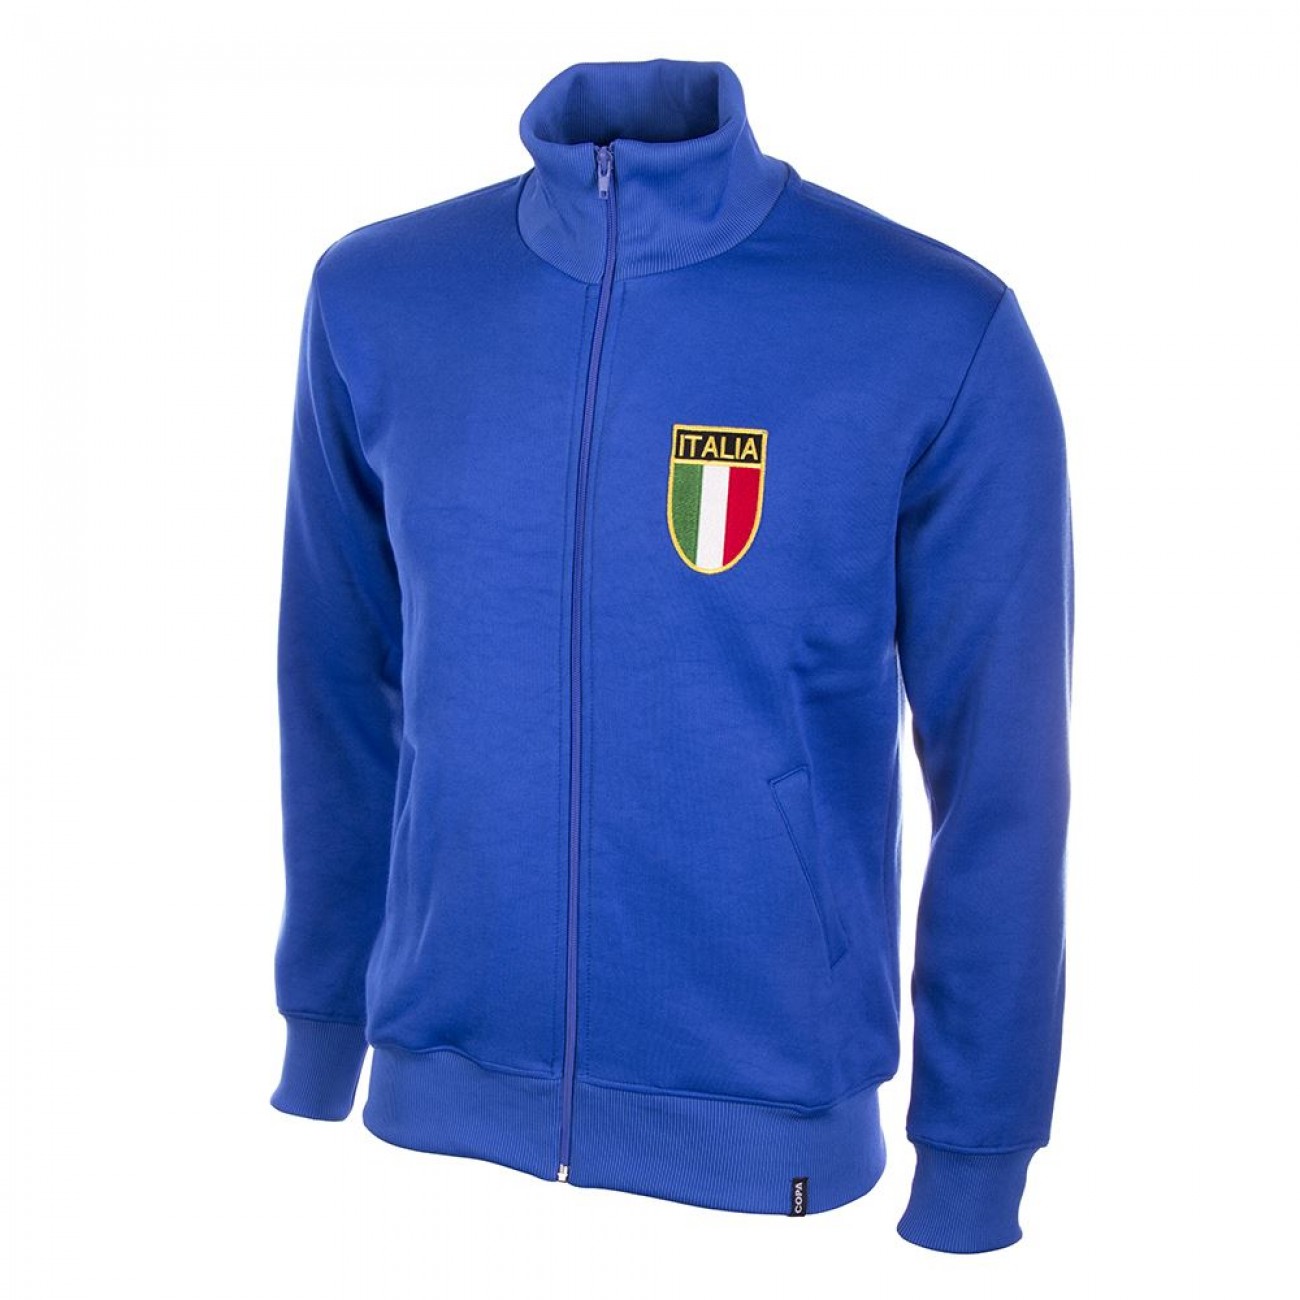 Veste rétro Italie années 70 - Retrofootball®